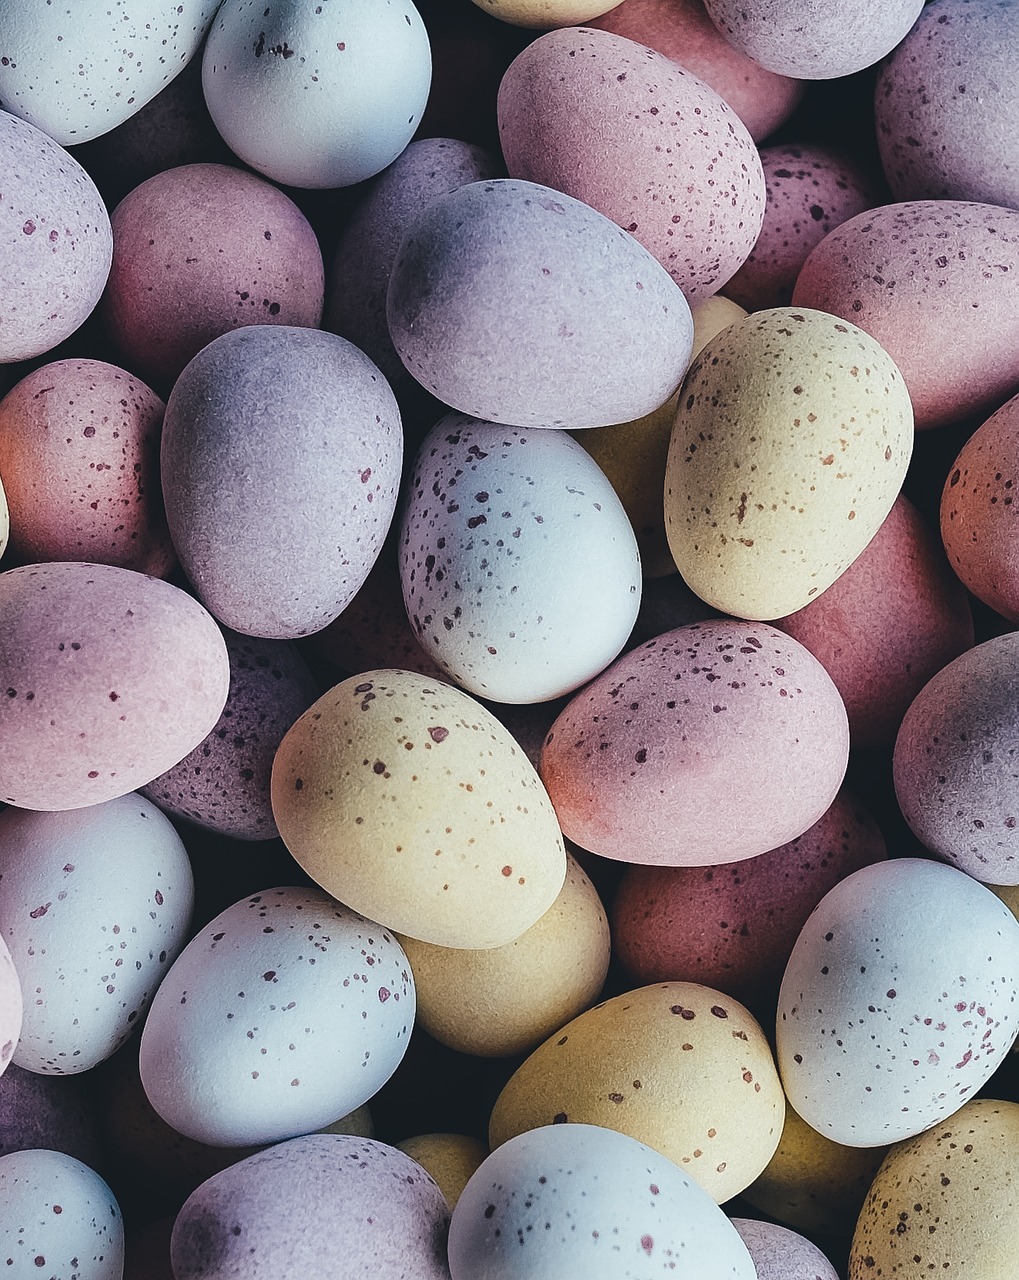 April Easter Eggs